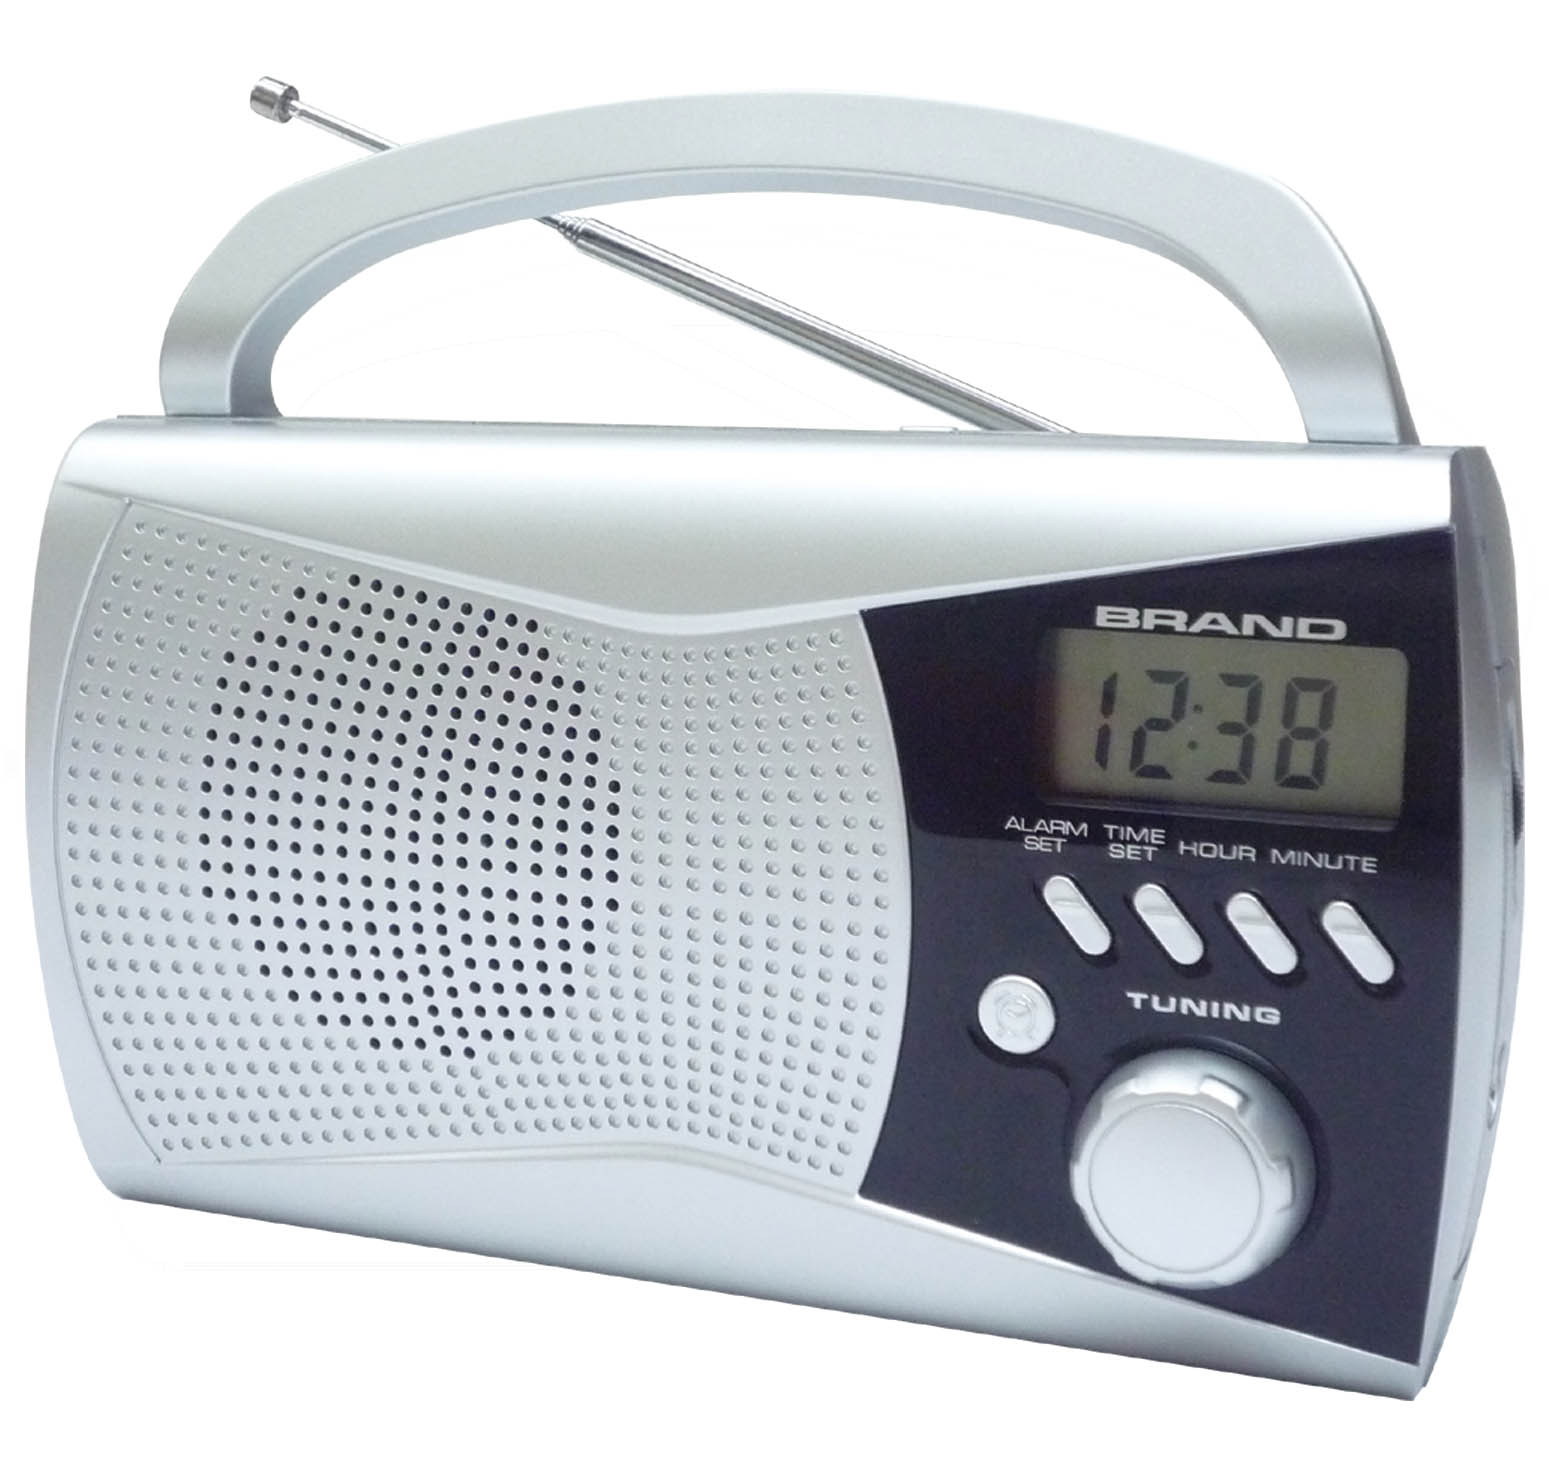 2/3 Band Portable Radio with Digital Alarm Clock